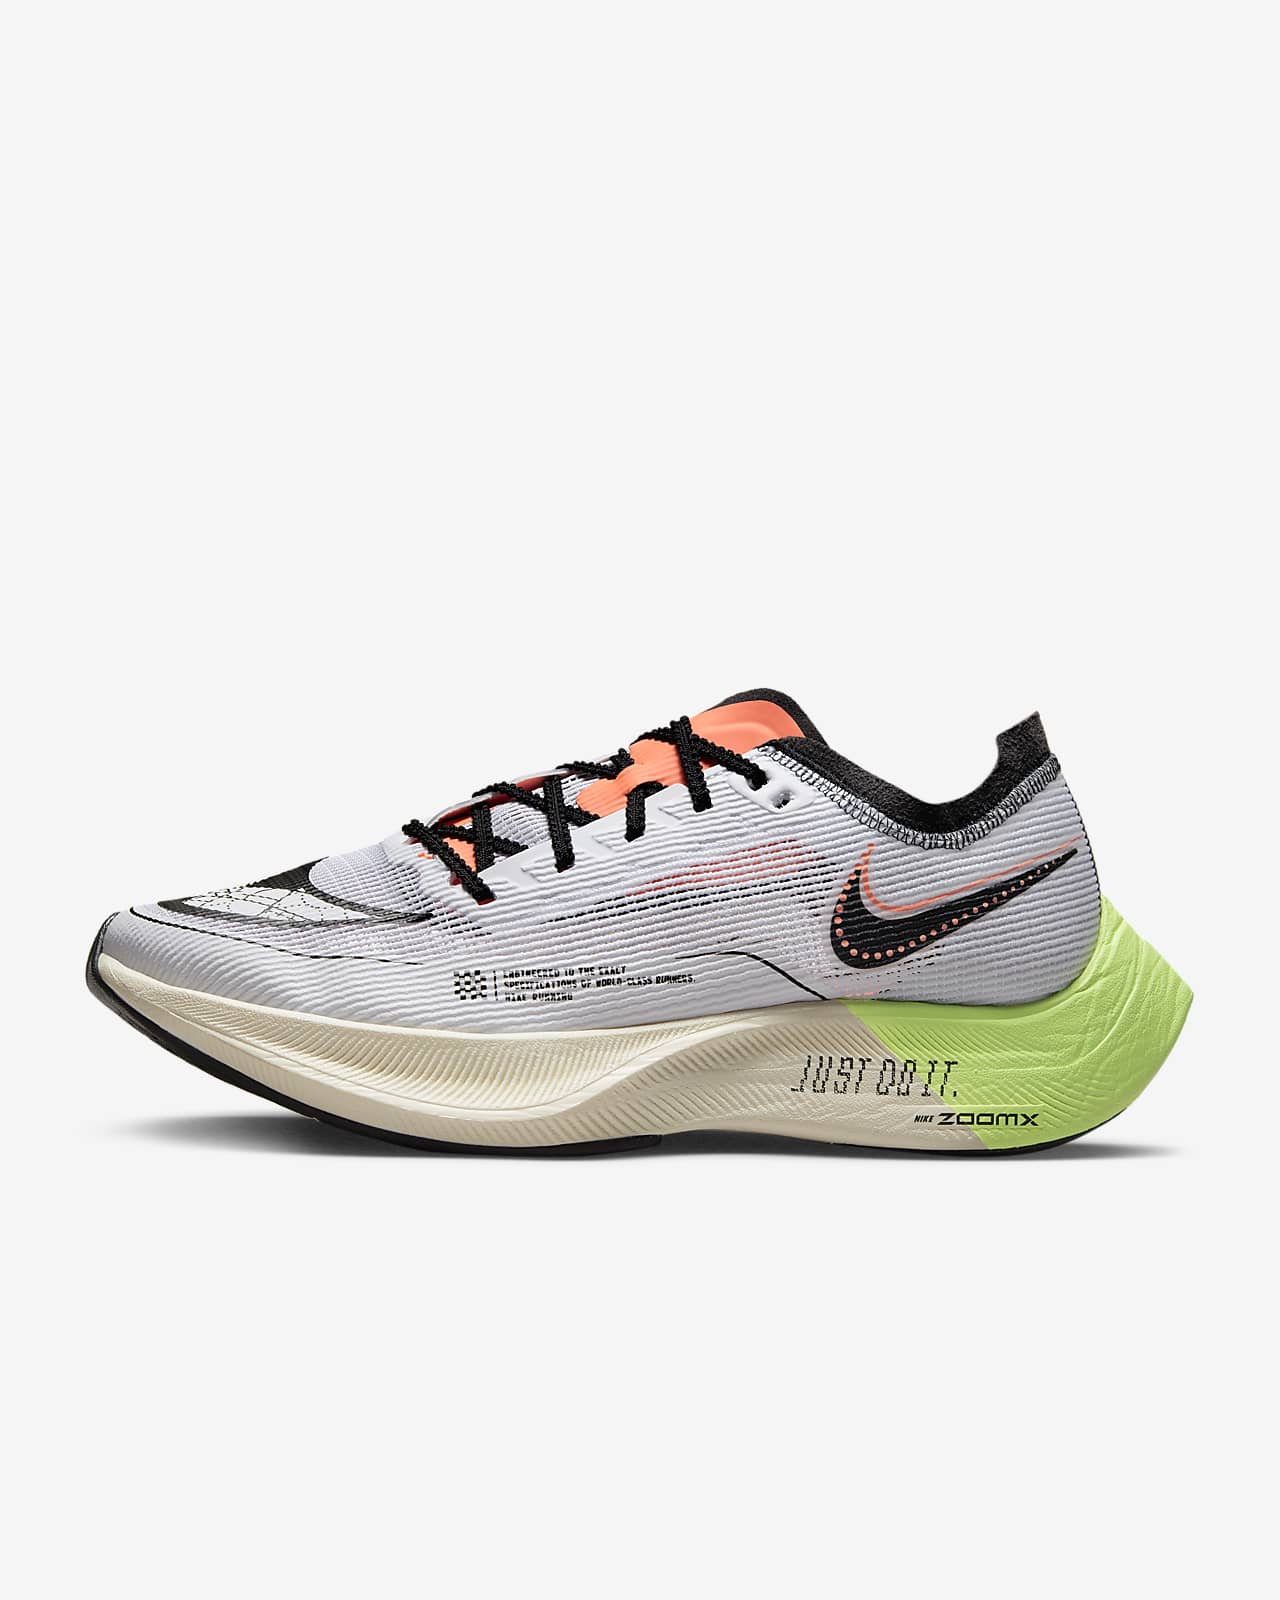 Nike ZoomX Vaporfly Next% 2 女子公路竞速跑步鞋